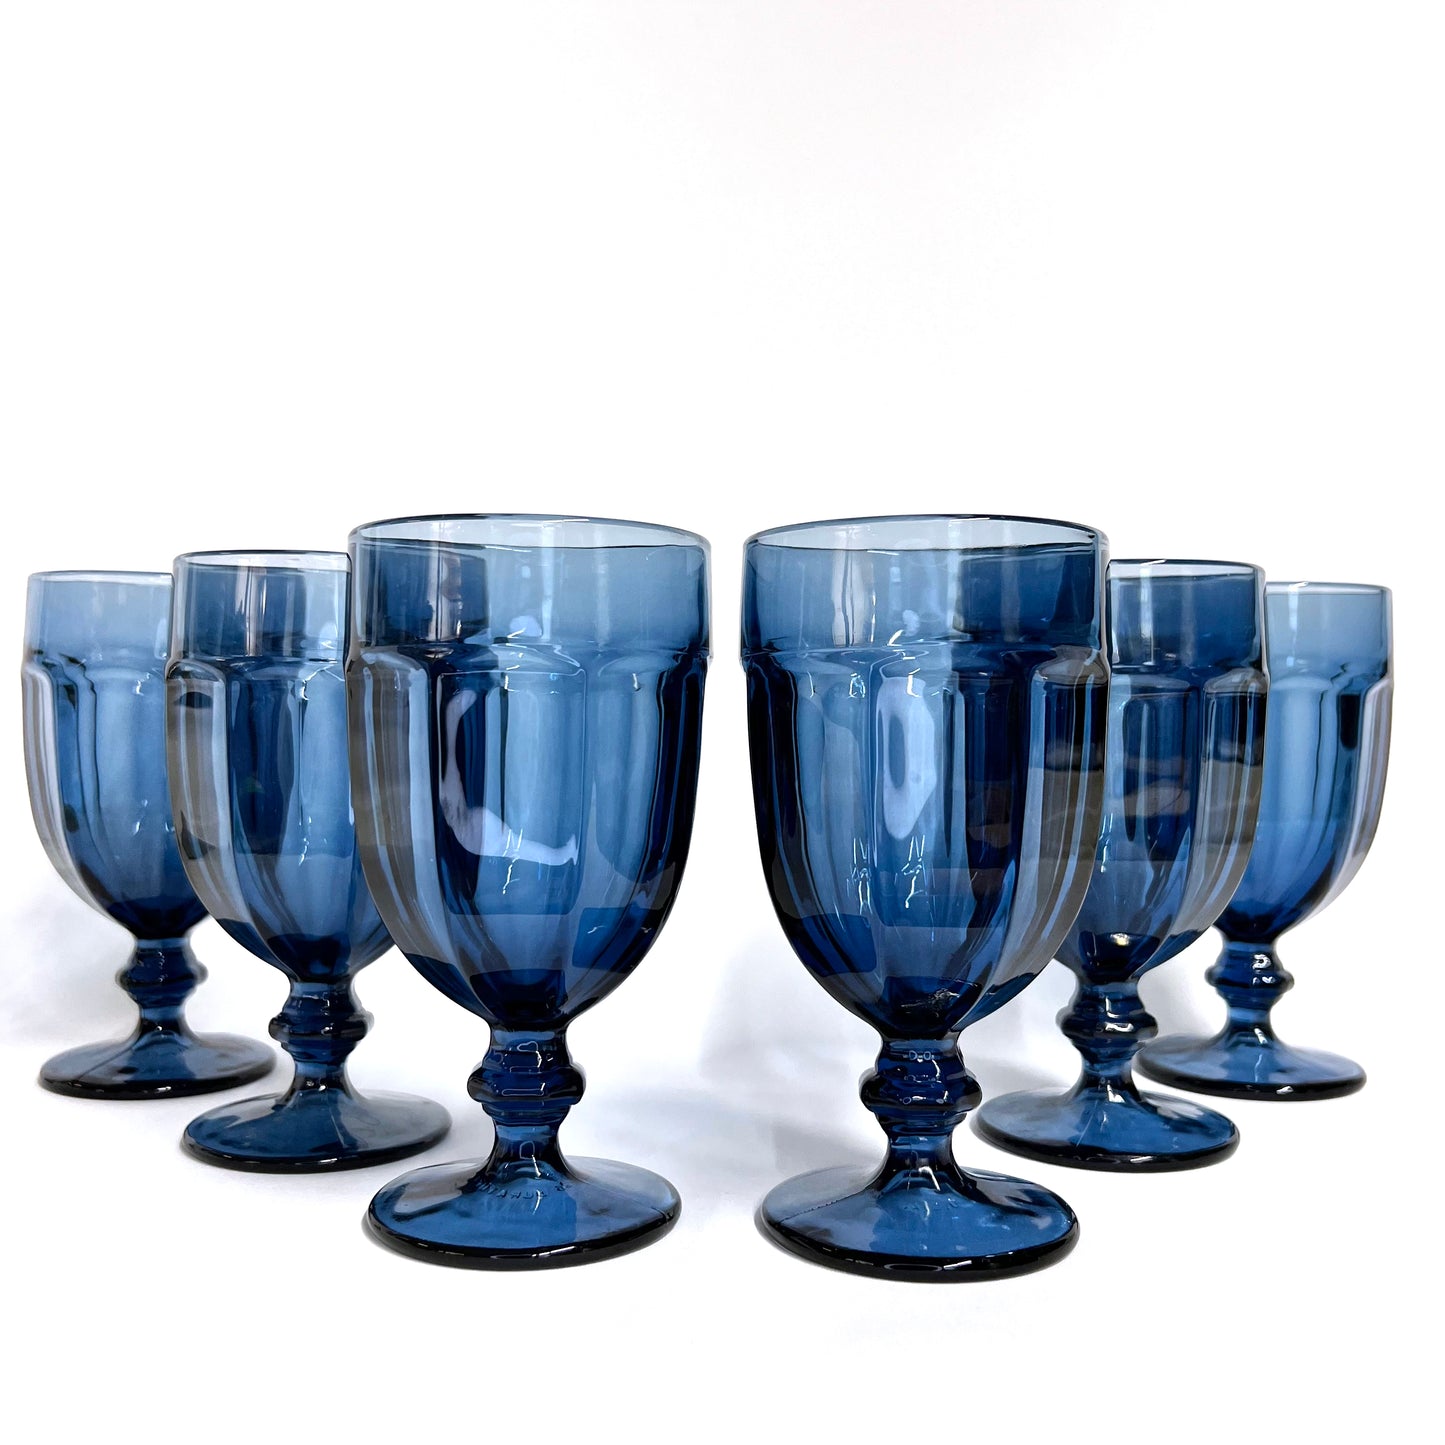 Libby Gilbraltor Dusky Blue, Iced Tea Glasses, Set of 6